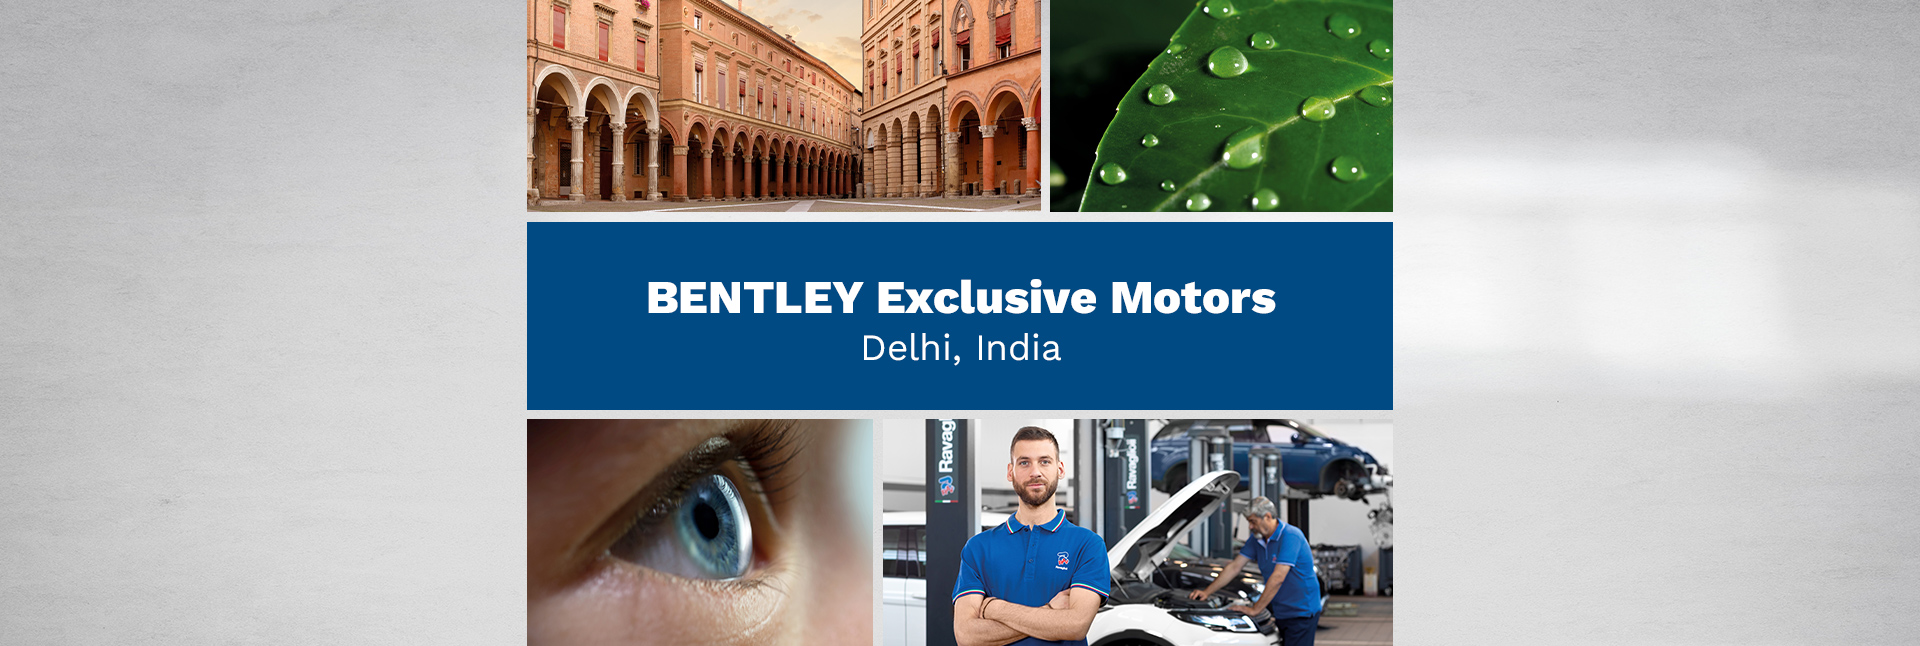 BENTLEY Exclusive Motors – Delhi, India